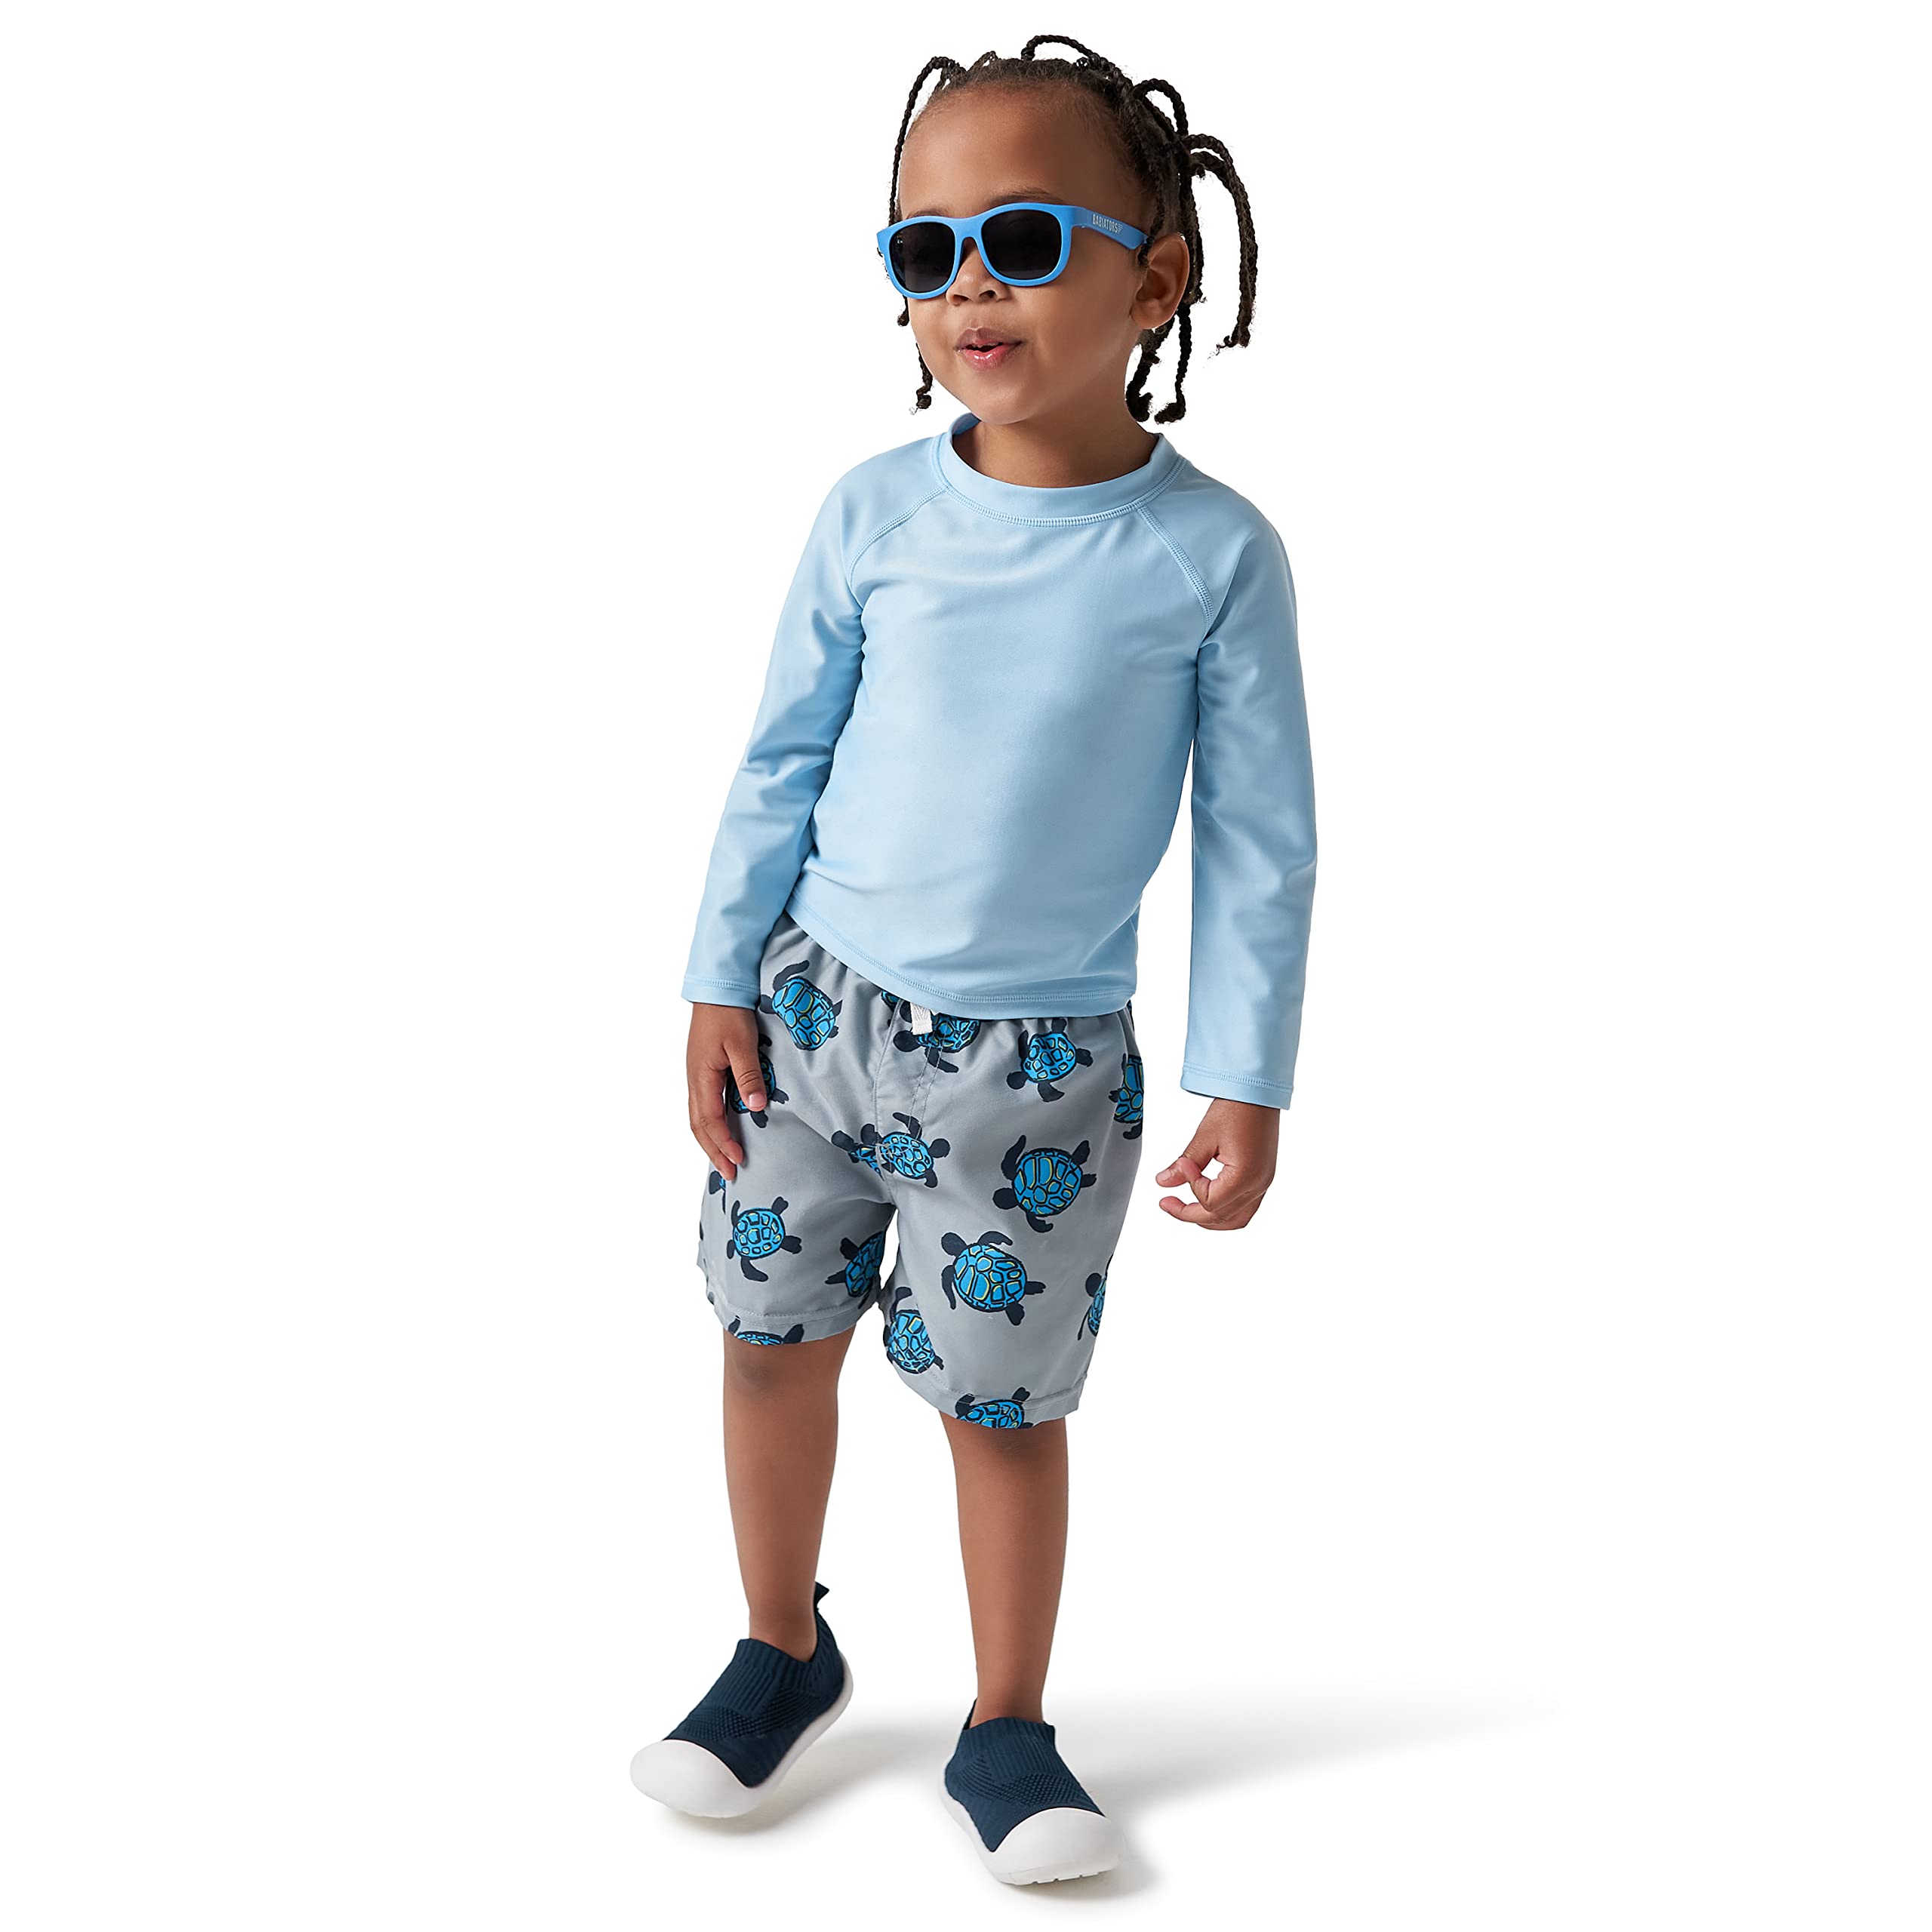 Gerber Unisex Baby Toddler UPF 50+ Long Sleeve Rashguard Swim Shirt